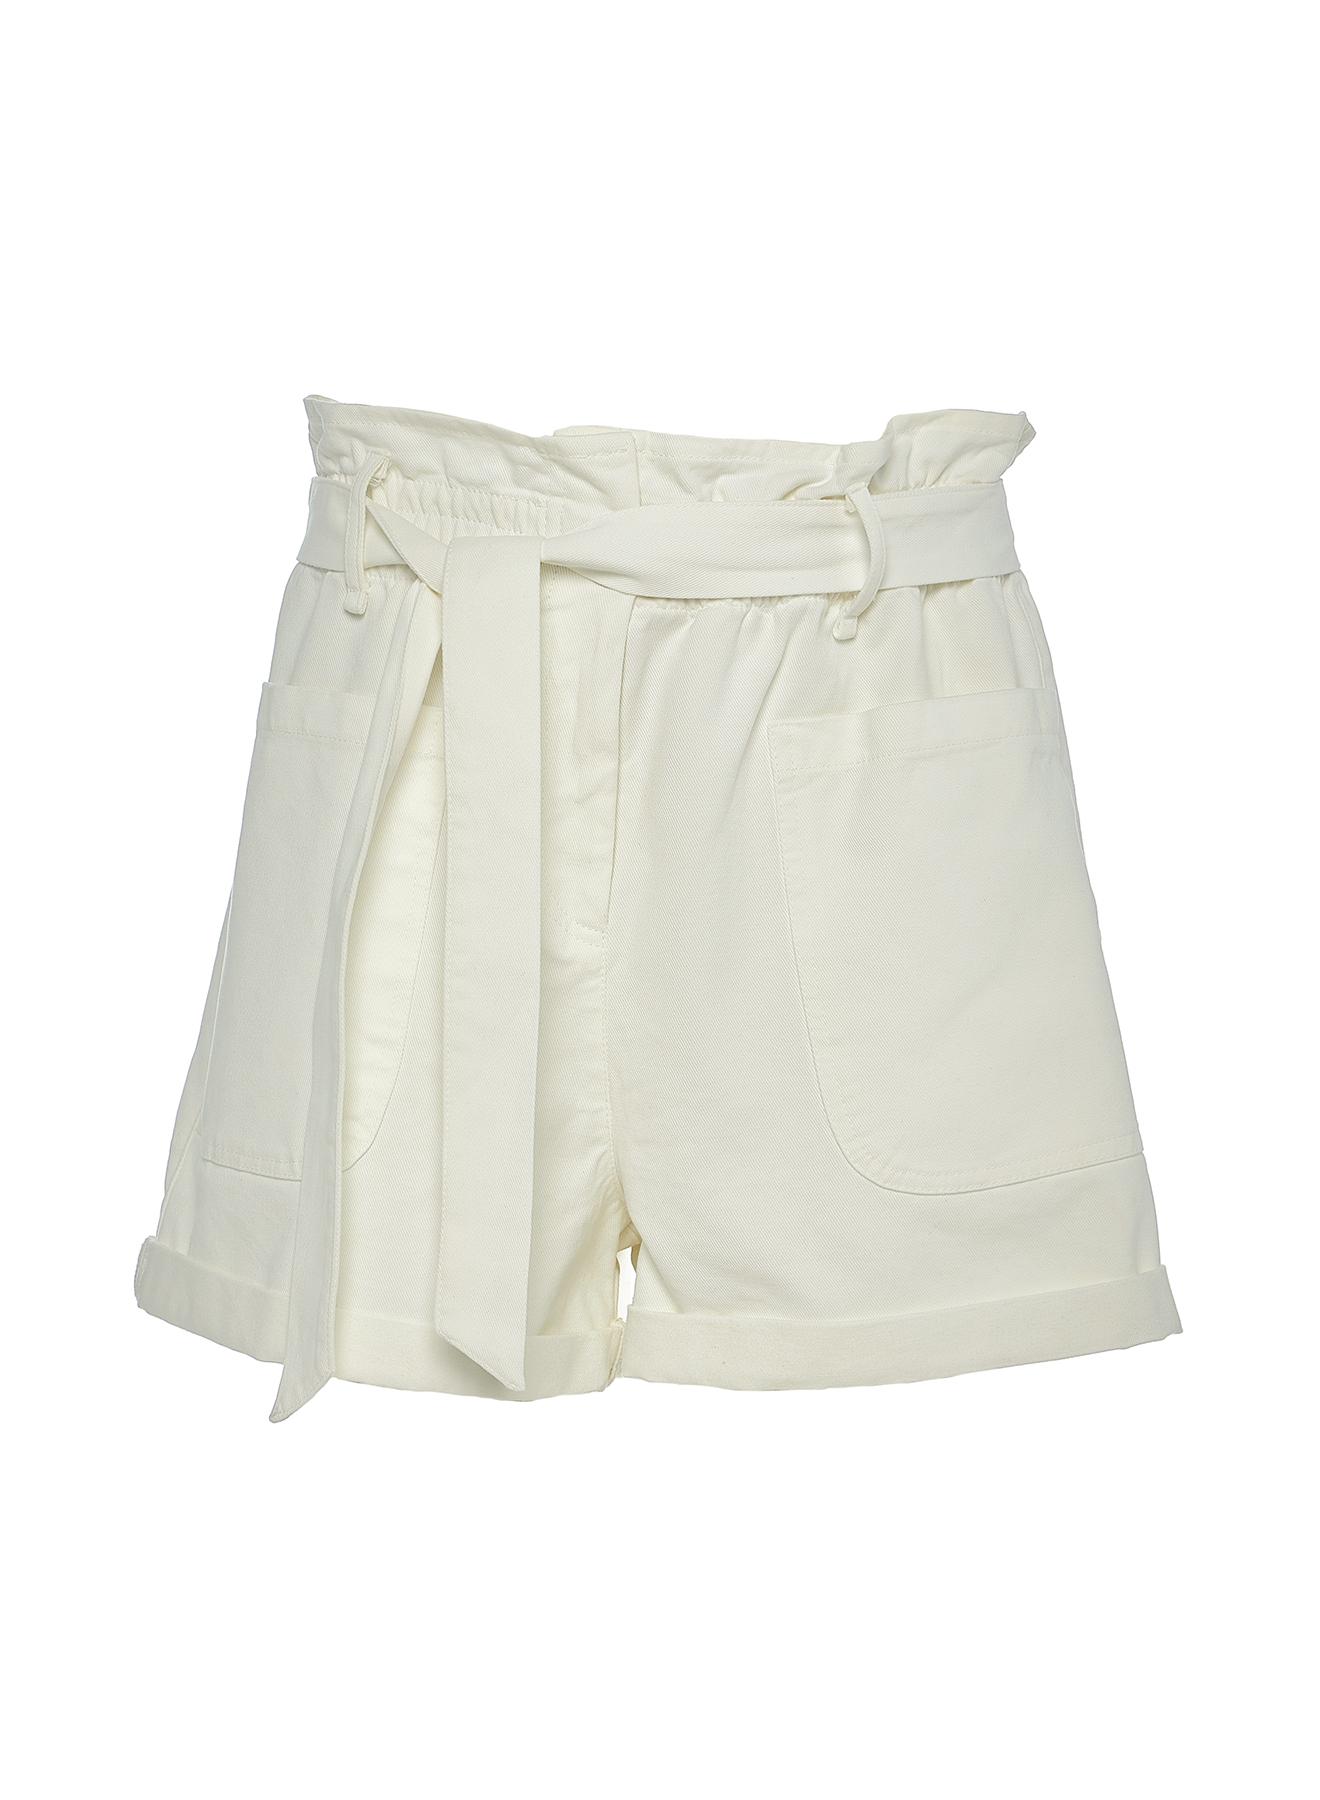 Off White denim Shorts with belt "ALMA" Devotion Twins - 1